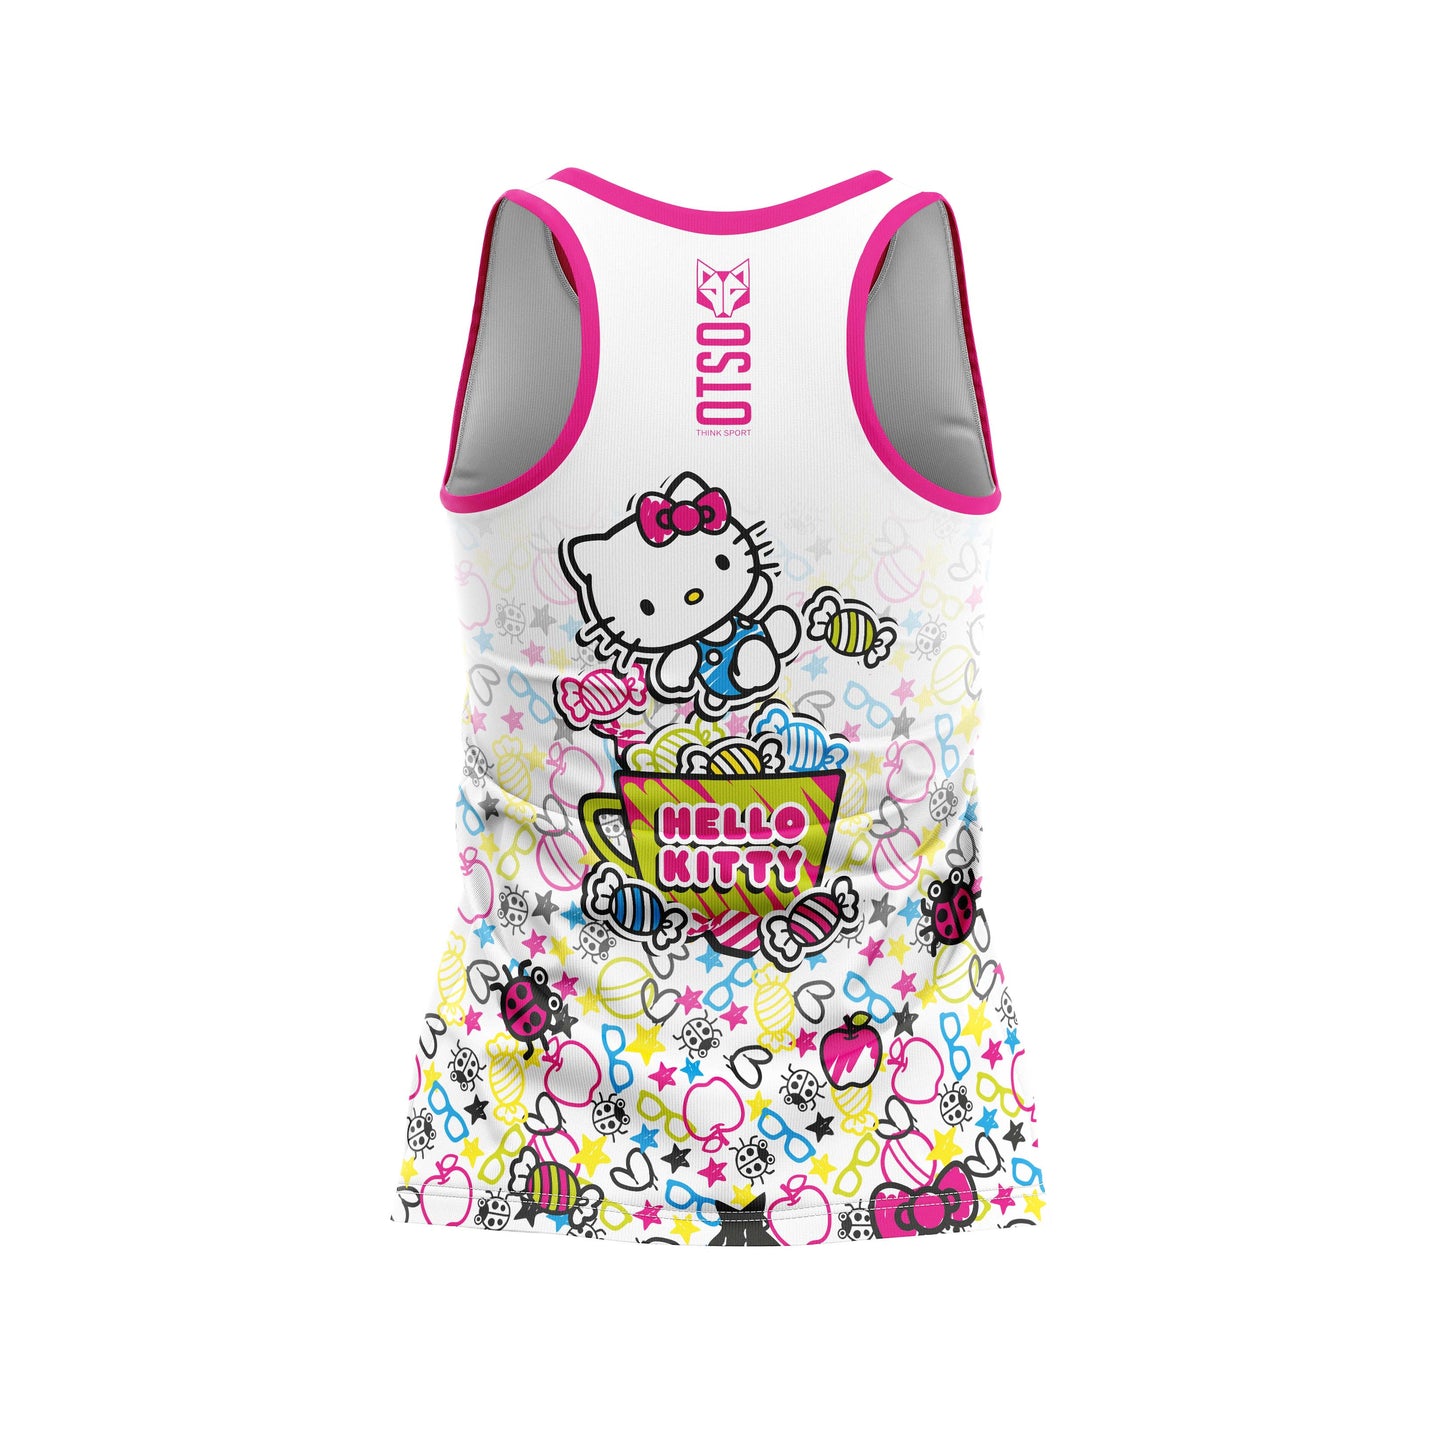 T-shirt senza maniche per bambina e donna - Hello Kitty Sweet